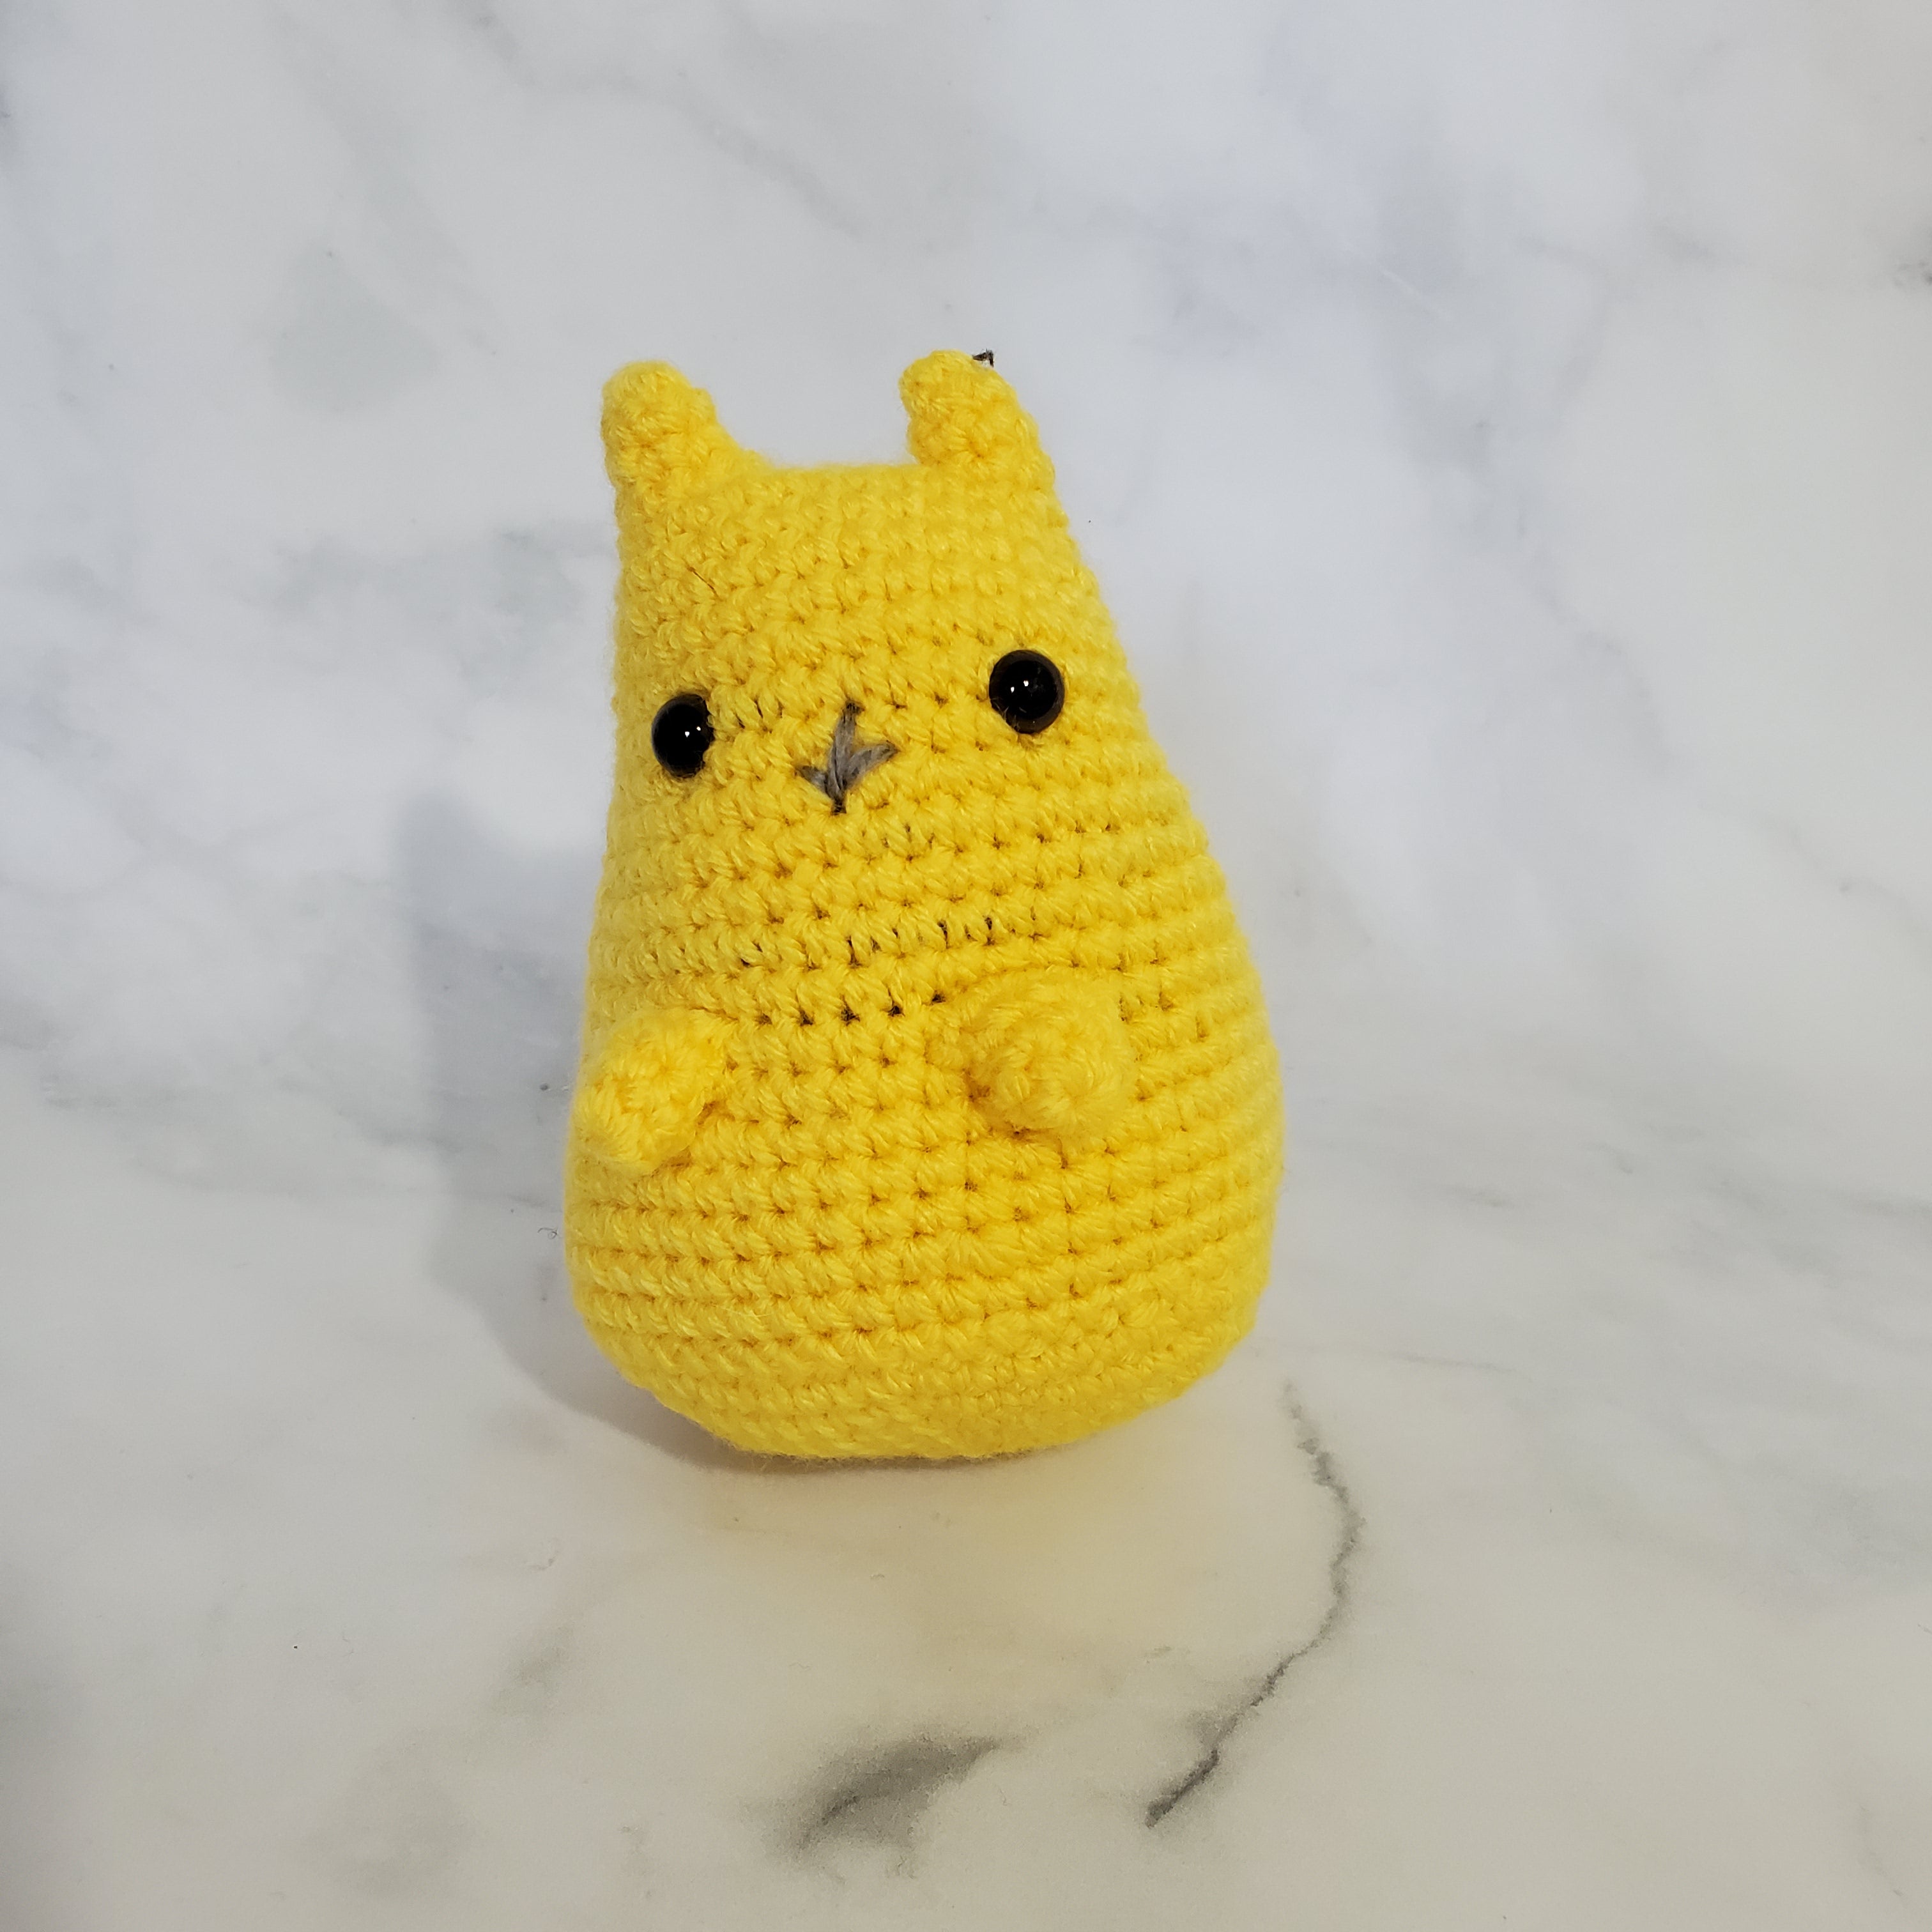 Dumpling Cat in Yellow - 4 Inches